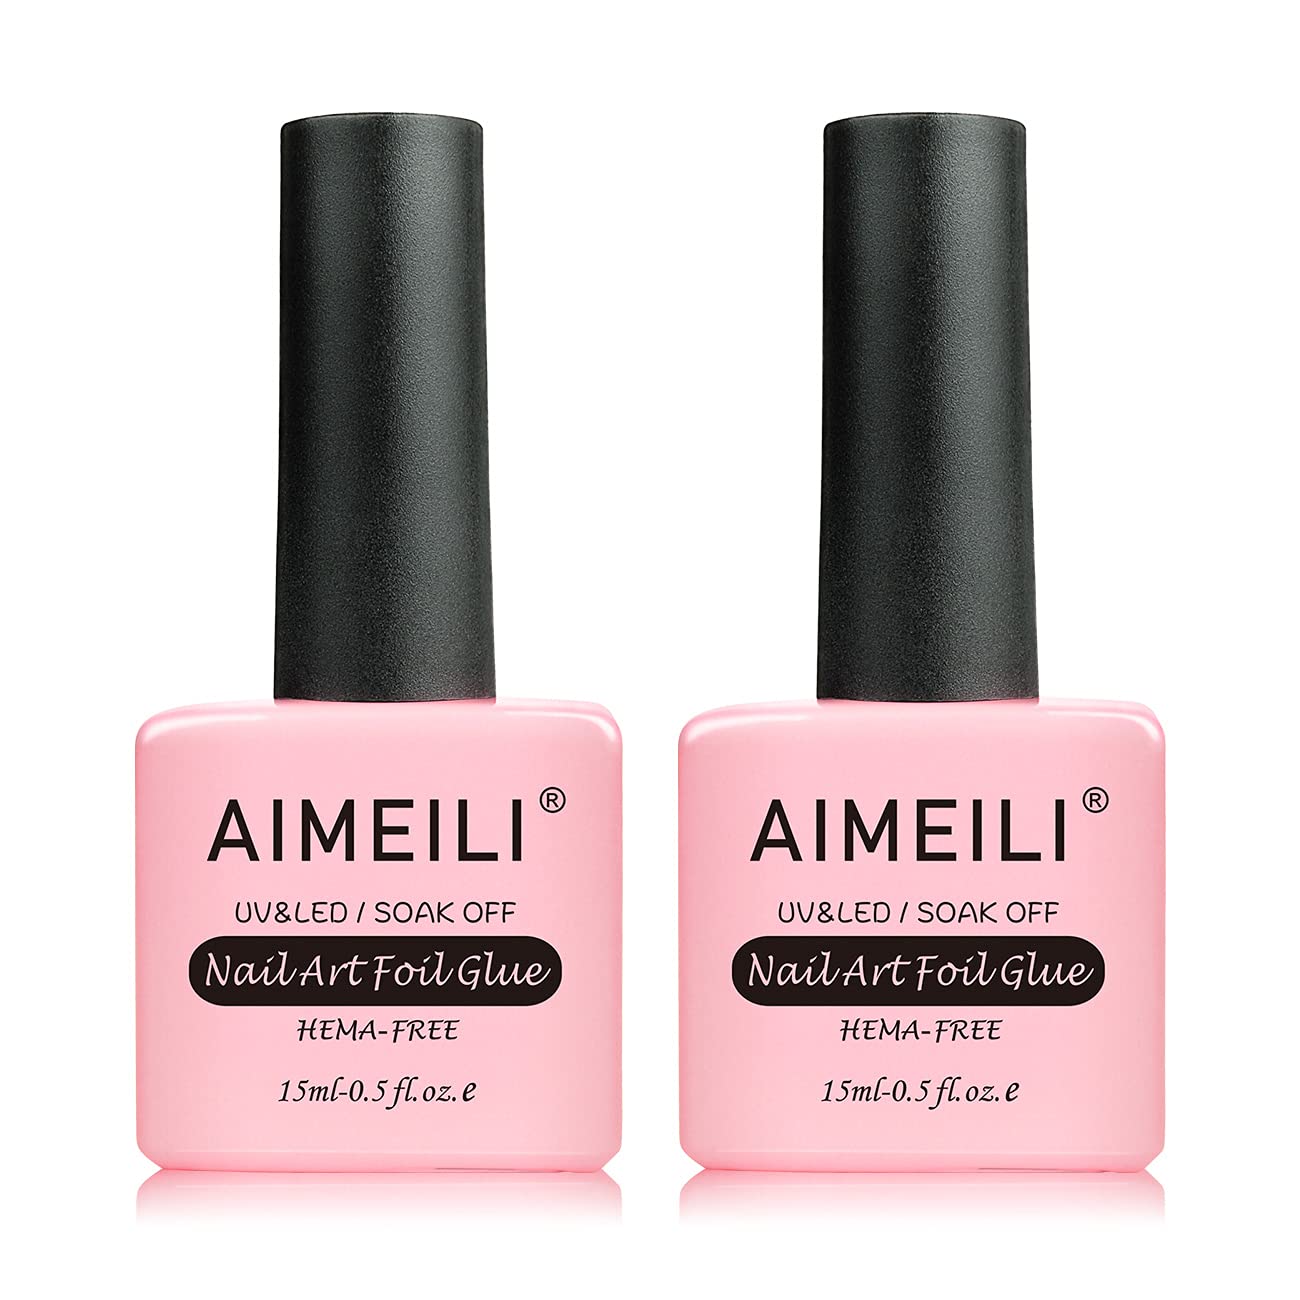 AIMEILI Nail Foil Nail Art Foil Glue Gel $4.99 + Free Shipping w/ Prime or Orders $25+